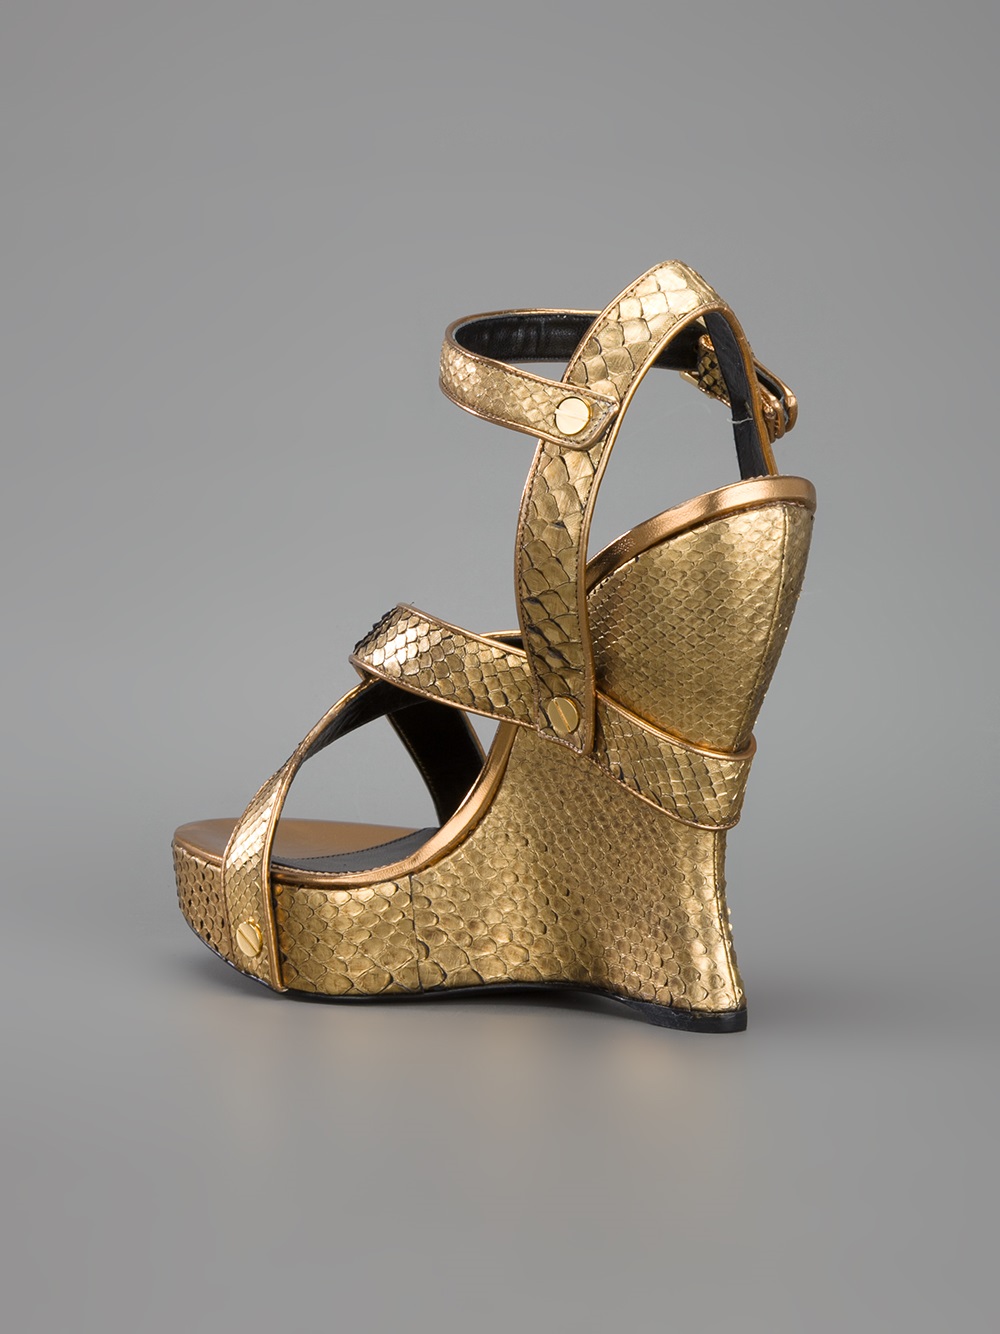 Tom Ford Metallic Wedge Sandal in Gold (Brown) - Lyst